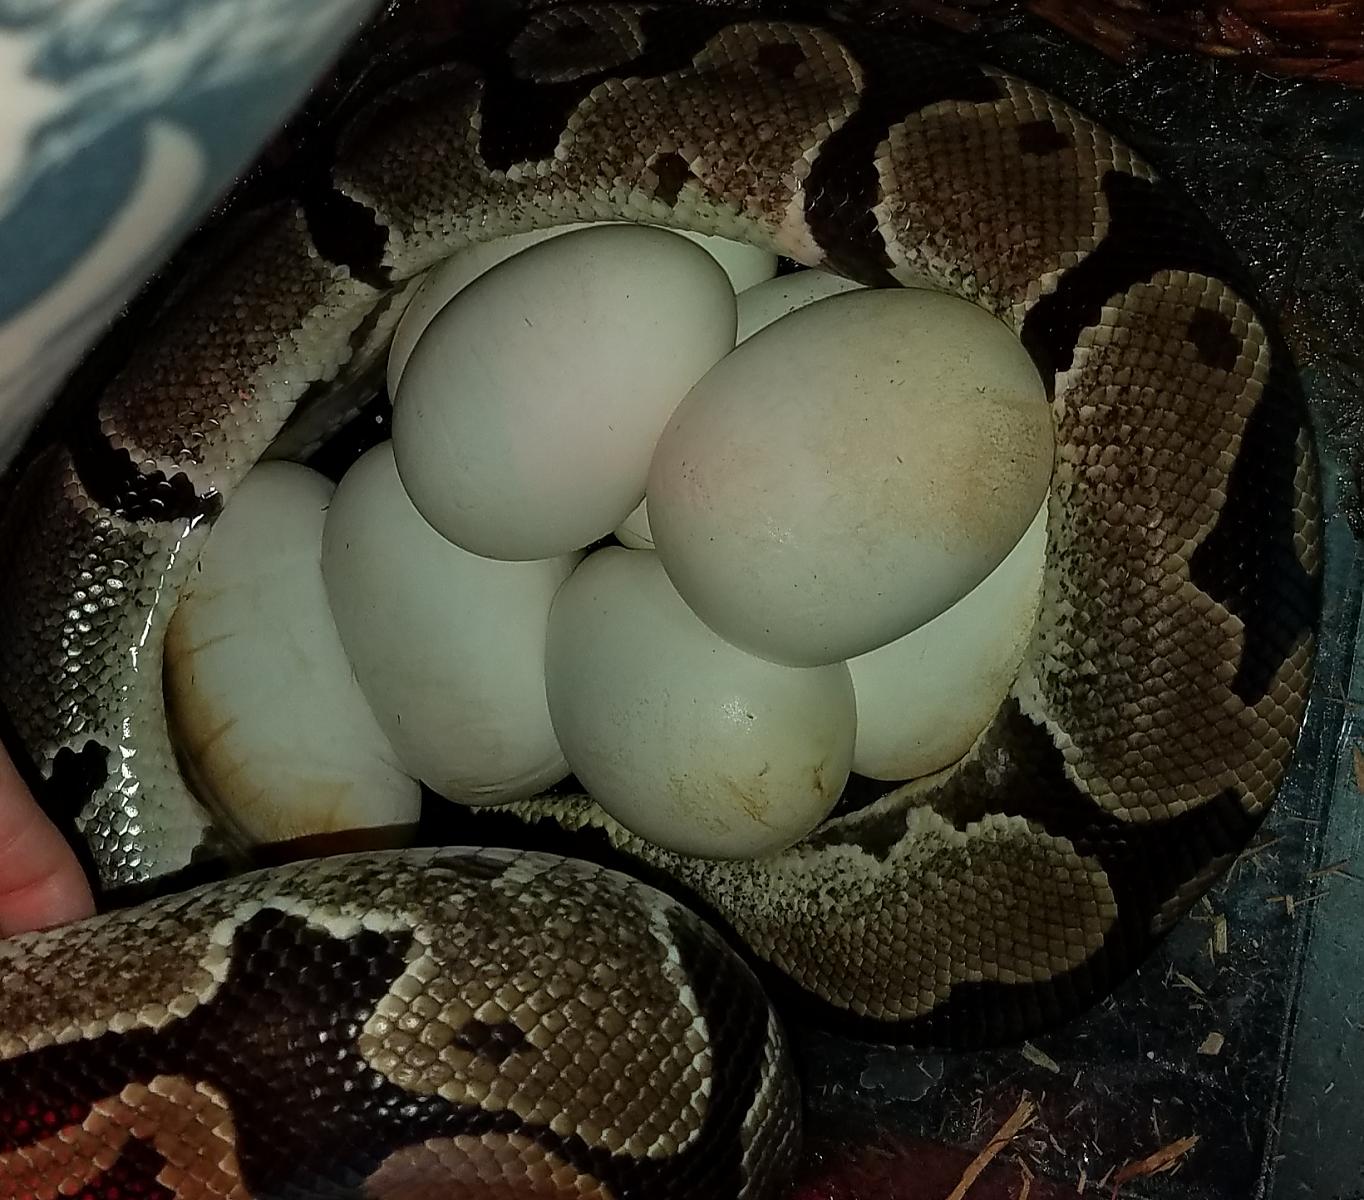 8 eggs!